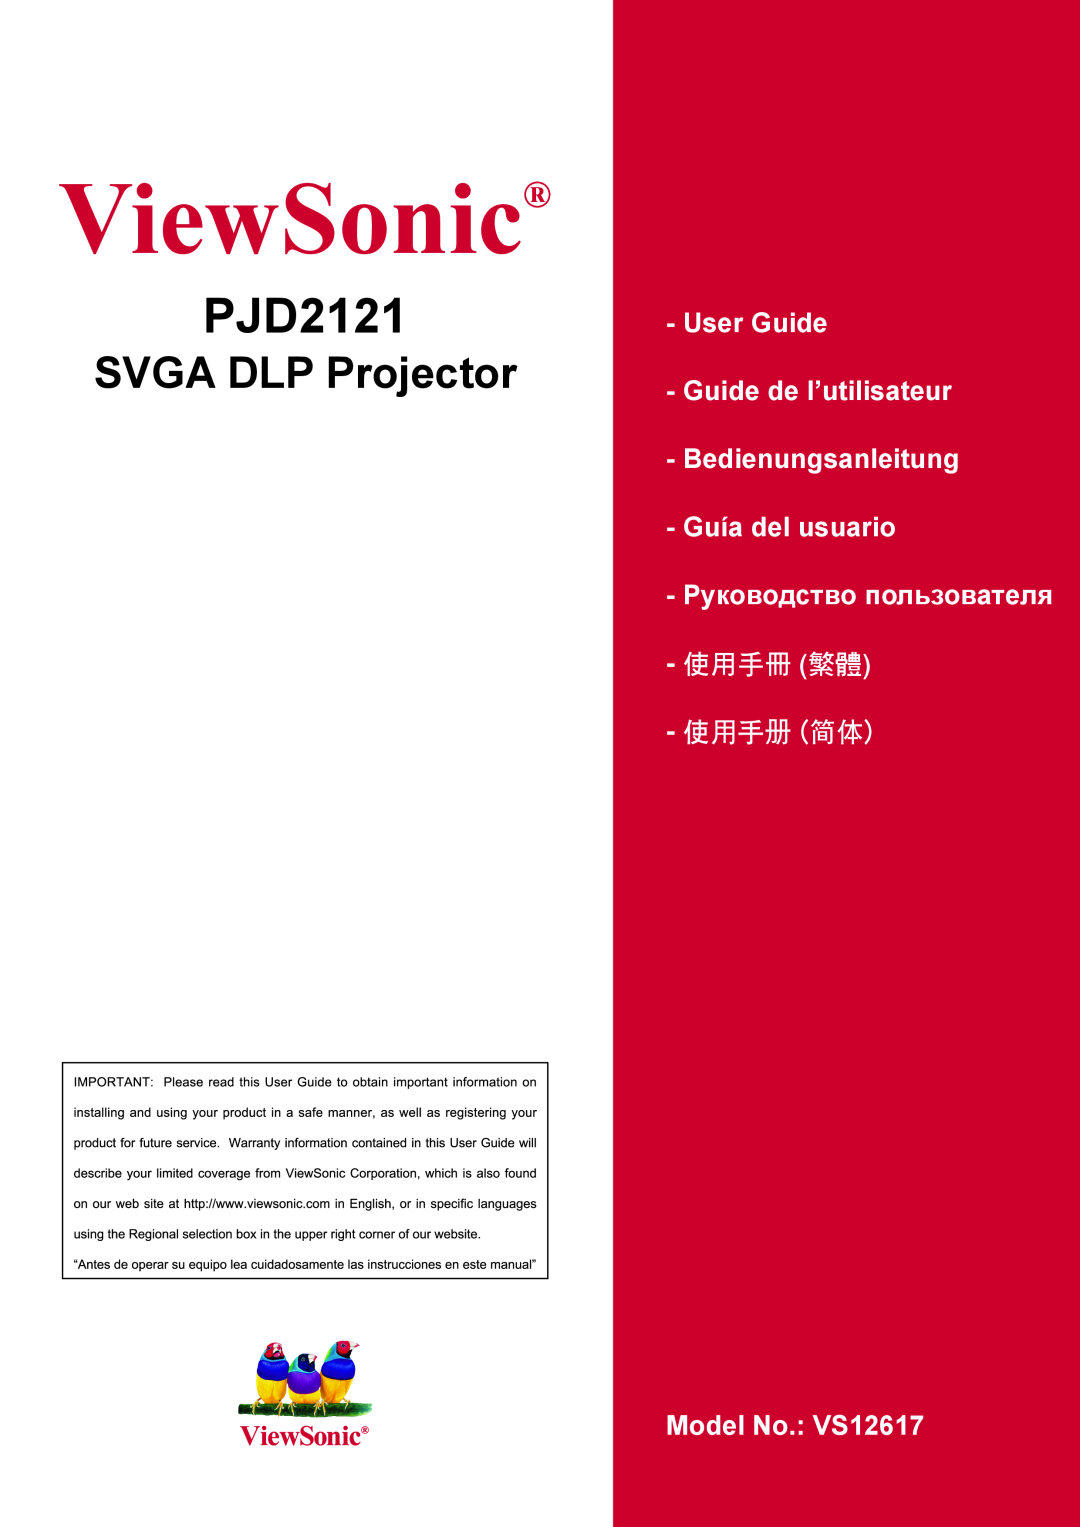 ViewSonic VS12617 manual ViewSonic, PJD2121, SVGA DLP Projector, User Guide Guide de l’utilisateur, 使用手冊 繁體 使用手冊 簡體 